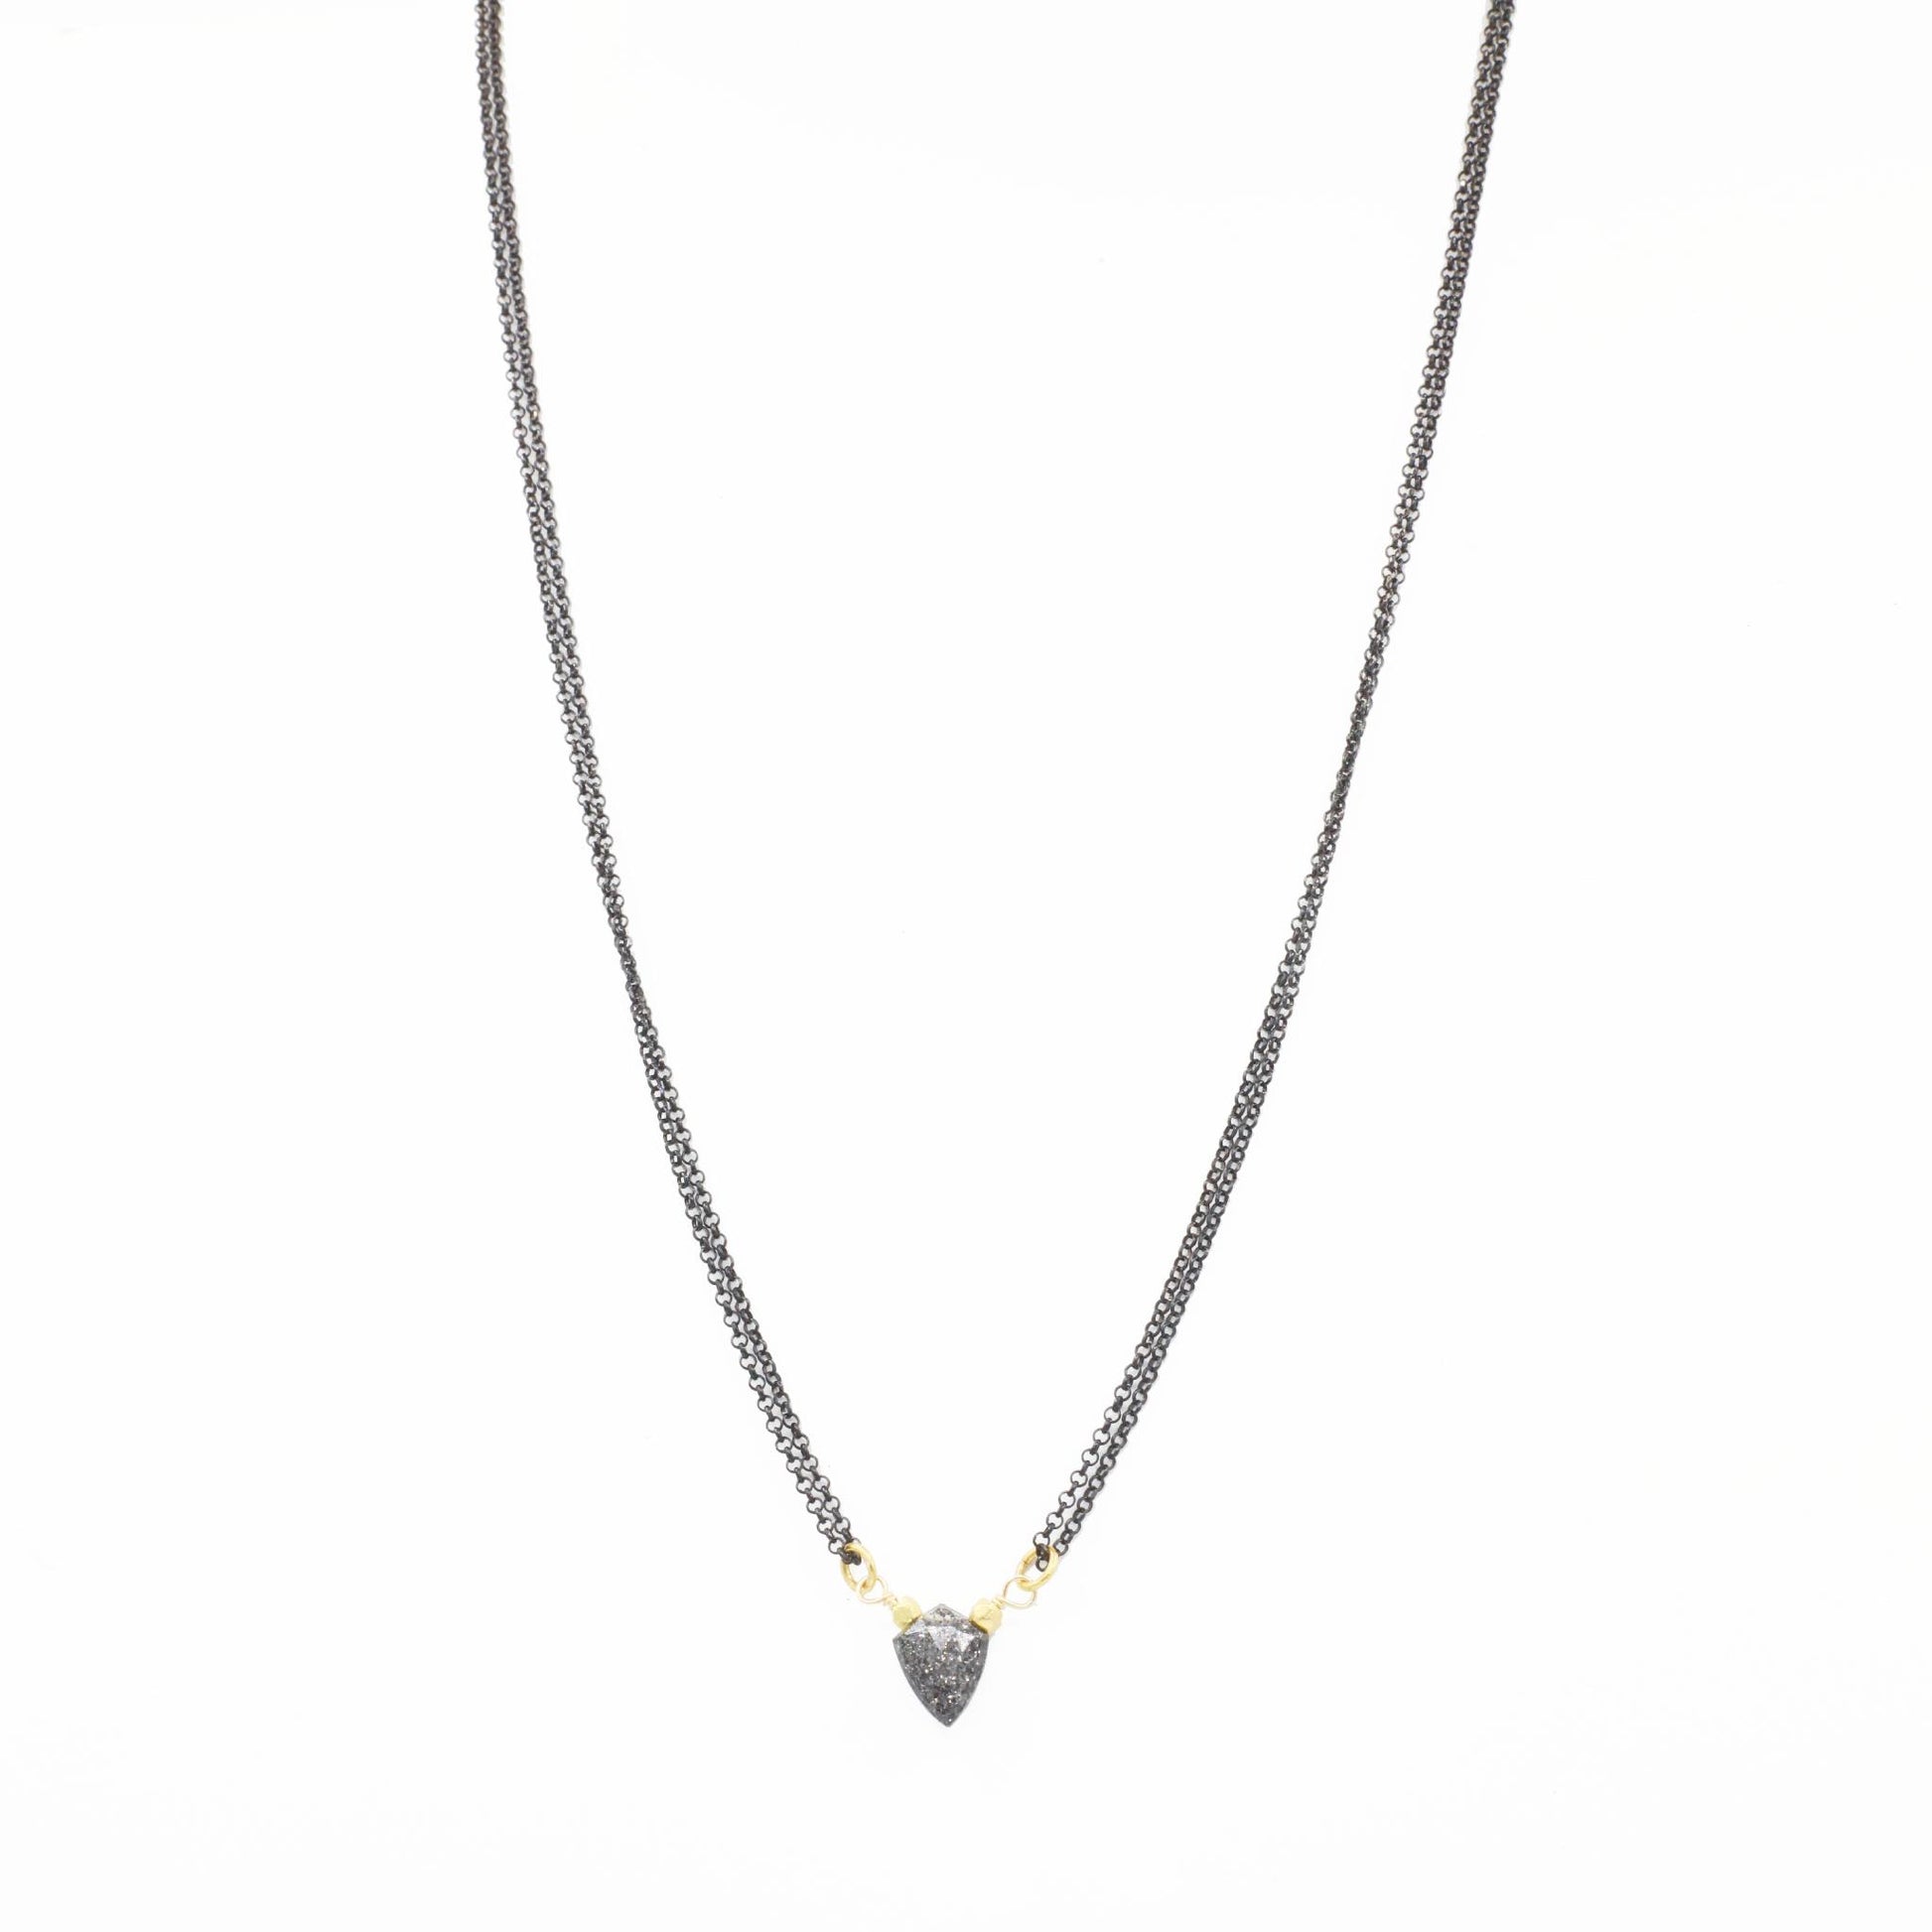 Robindira Unsworth Jewelry | ASunstone + Oxidized Sterling Silver Gemstone Necklace | Firecracker